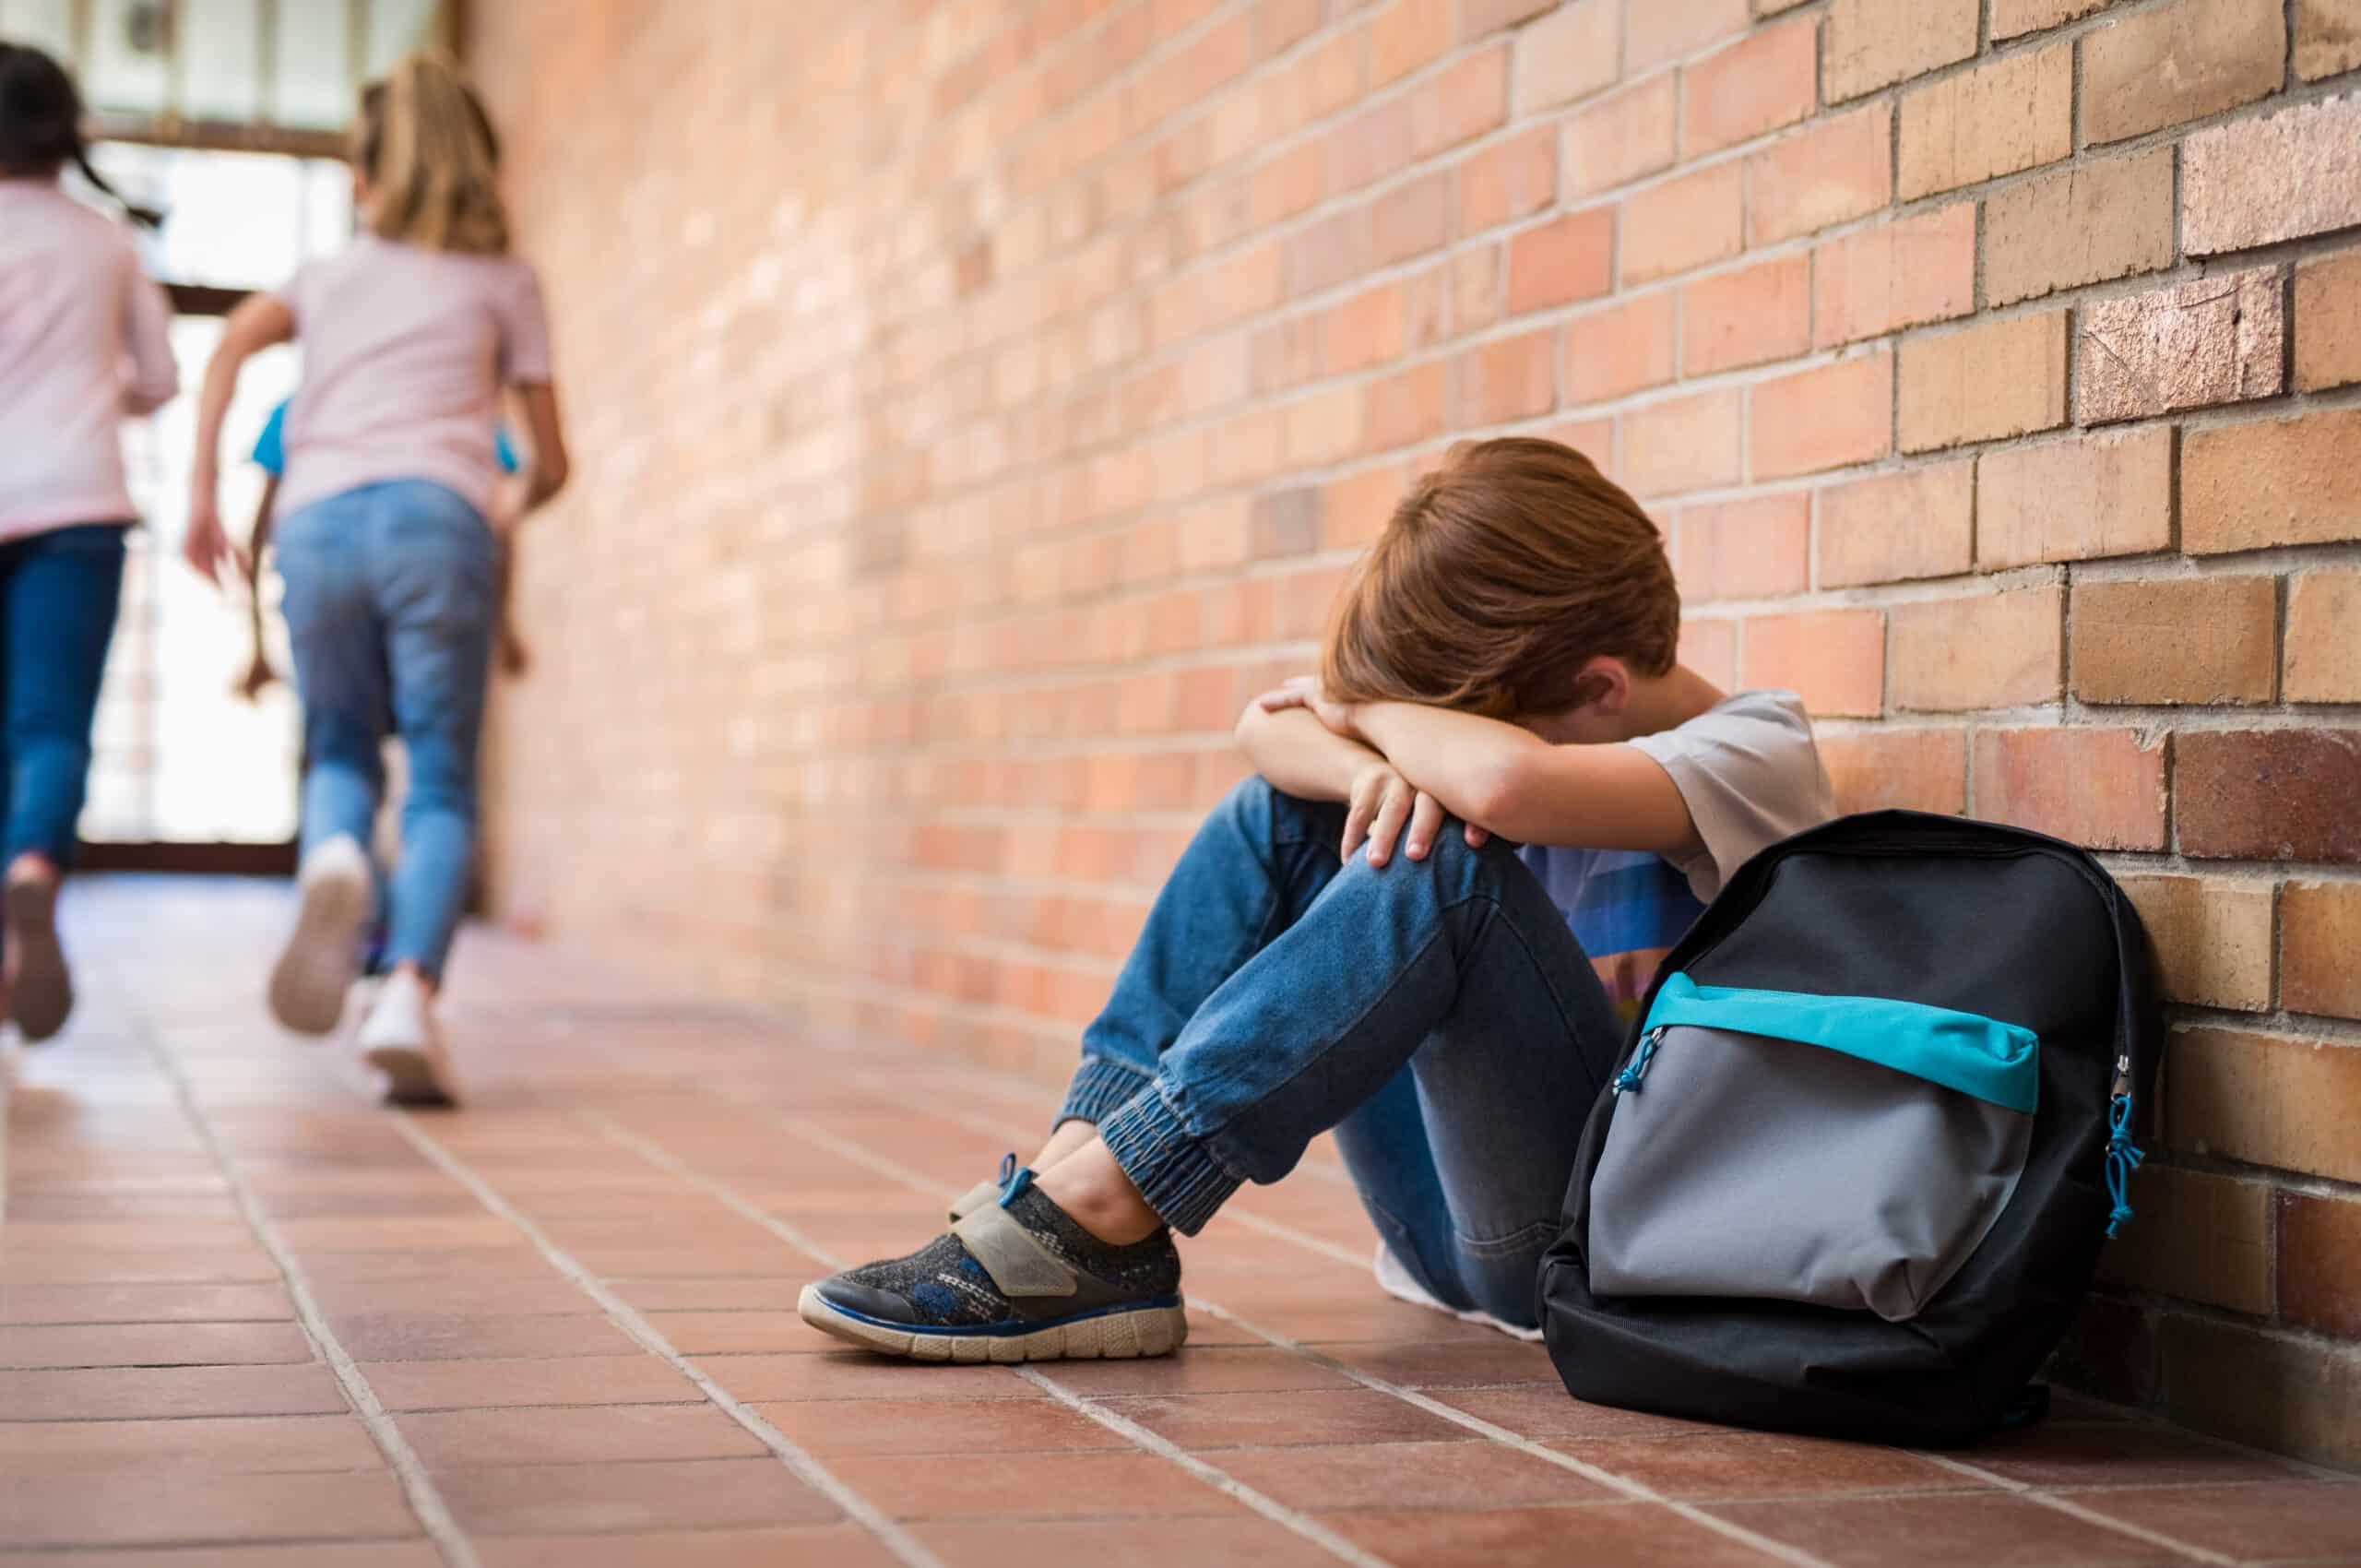 bullying at school 2021 08 26 15 34 41 utc scaled